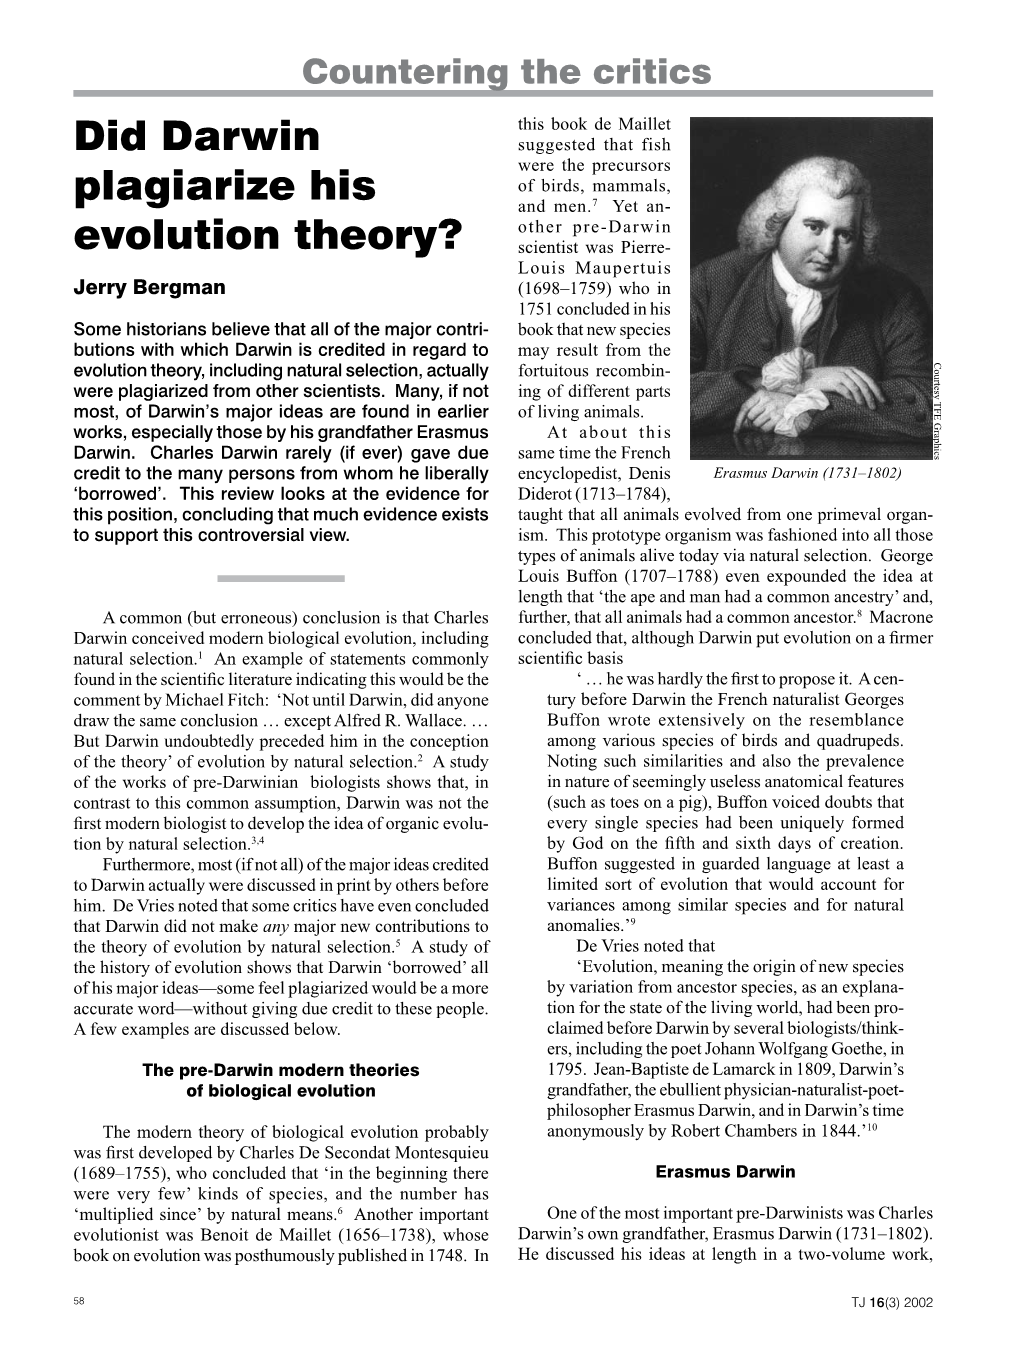 Did Darwin Plagiarize His Evolution Theory? — Bergman